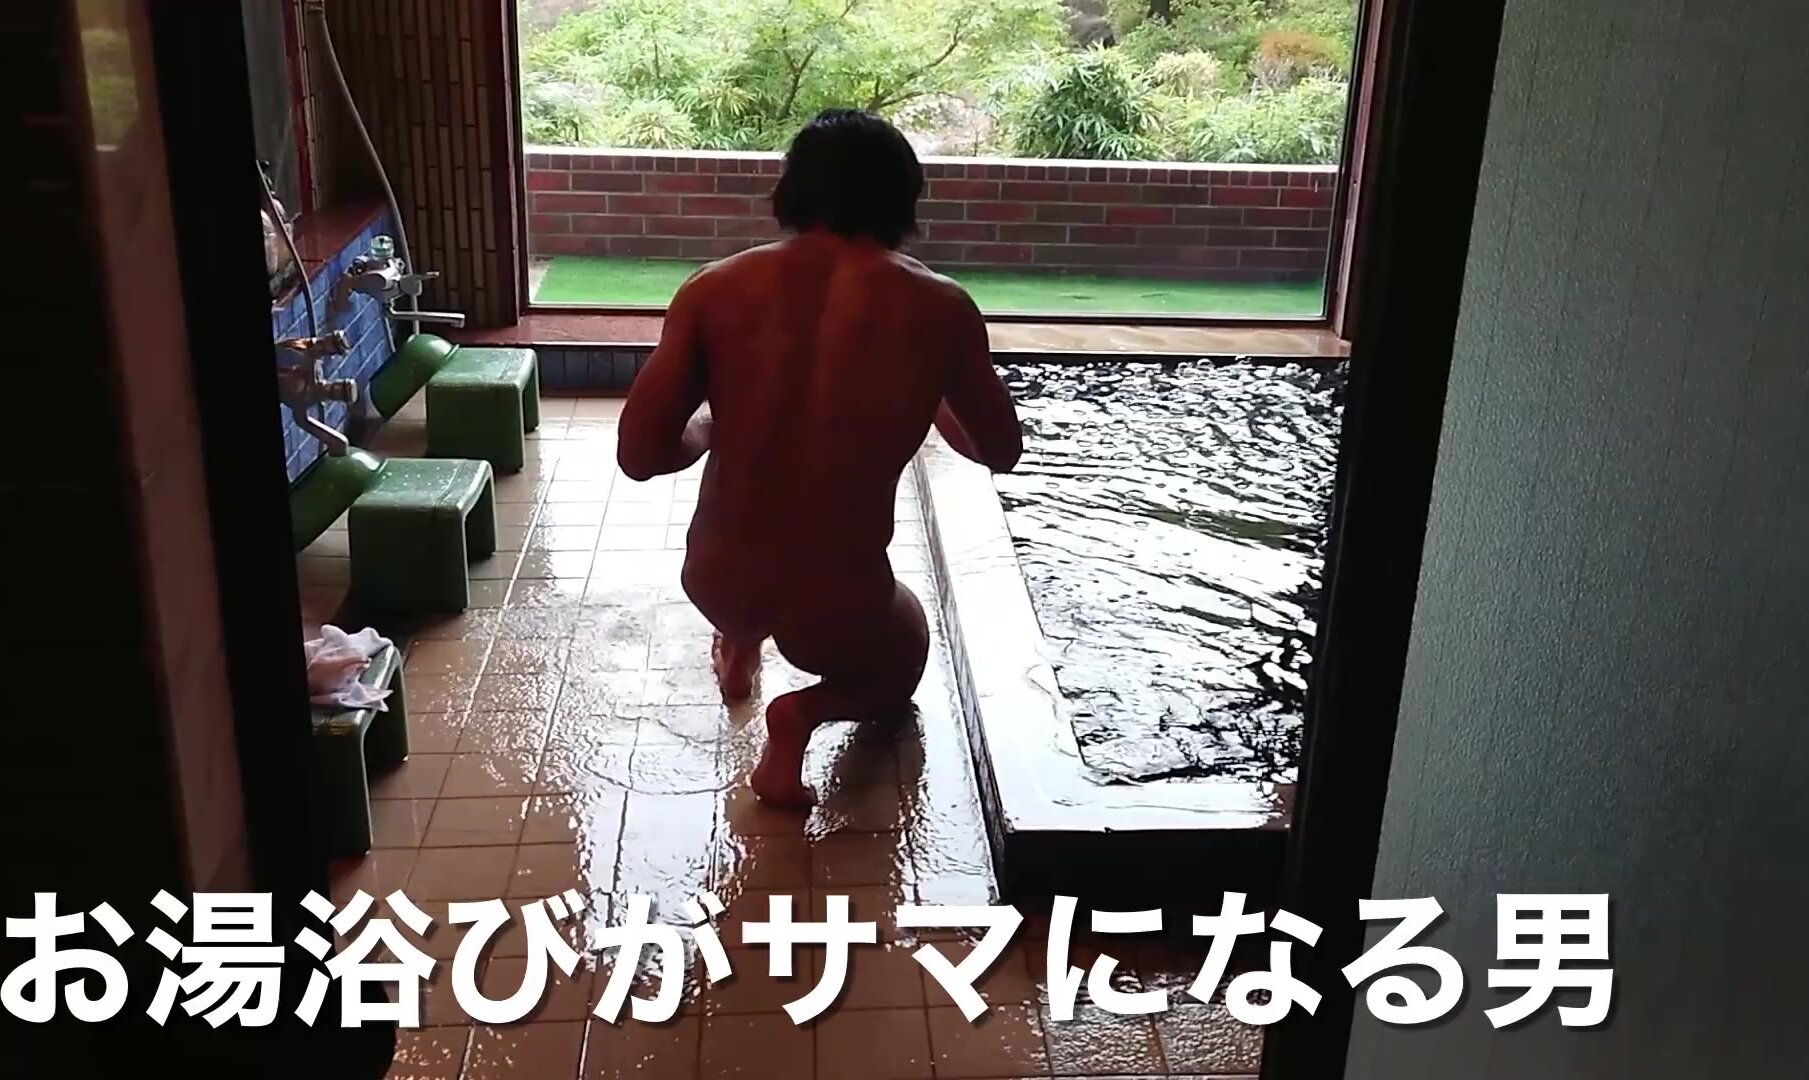 Japanese Hunk Bare Nude Ass